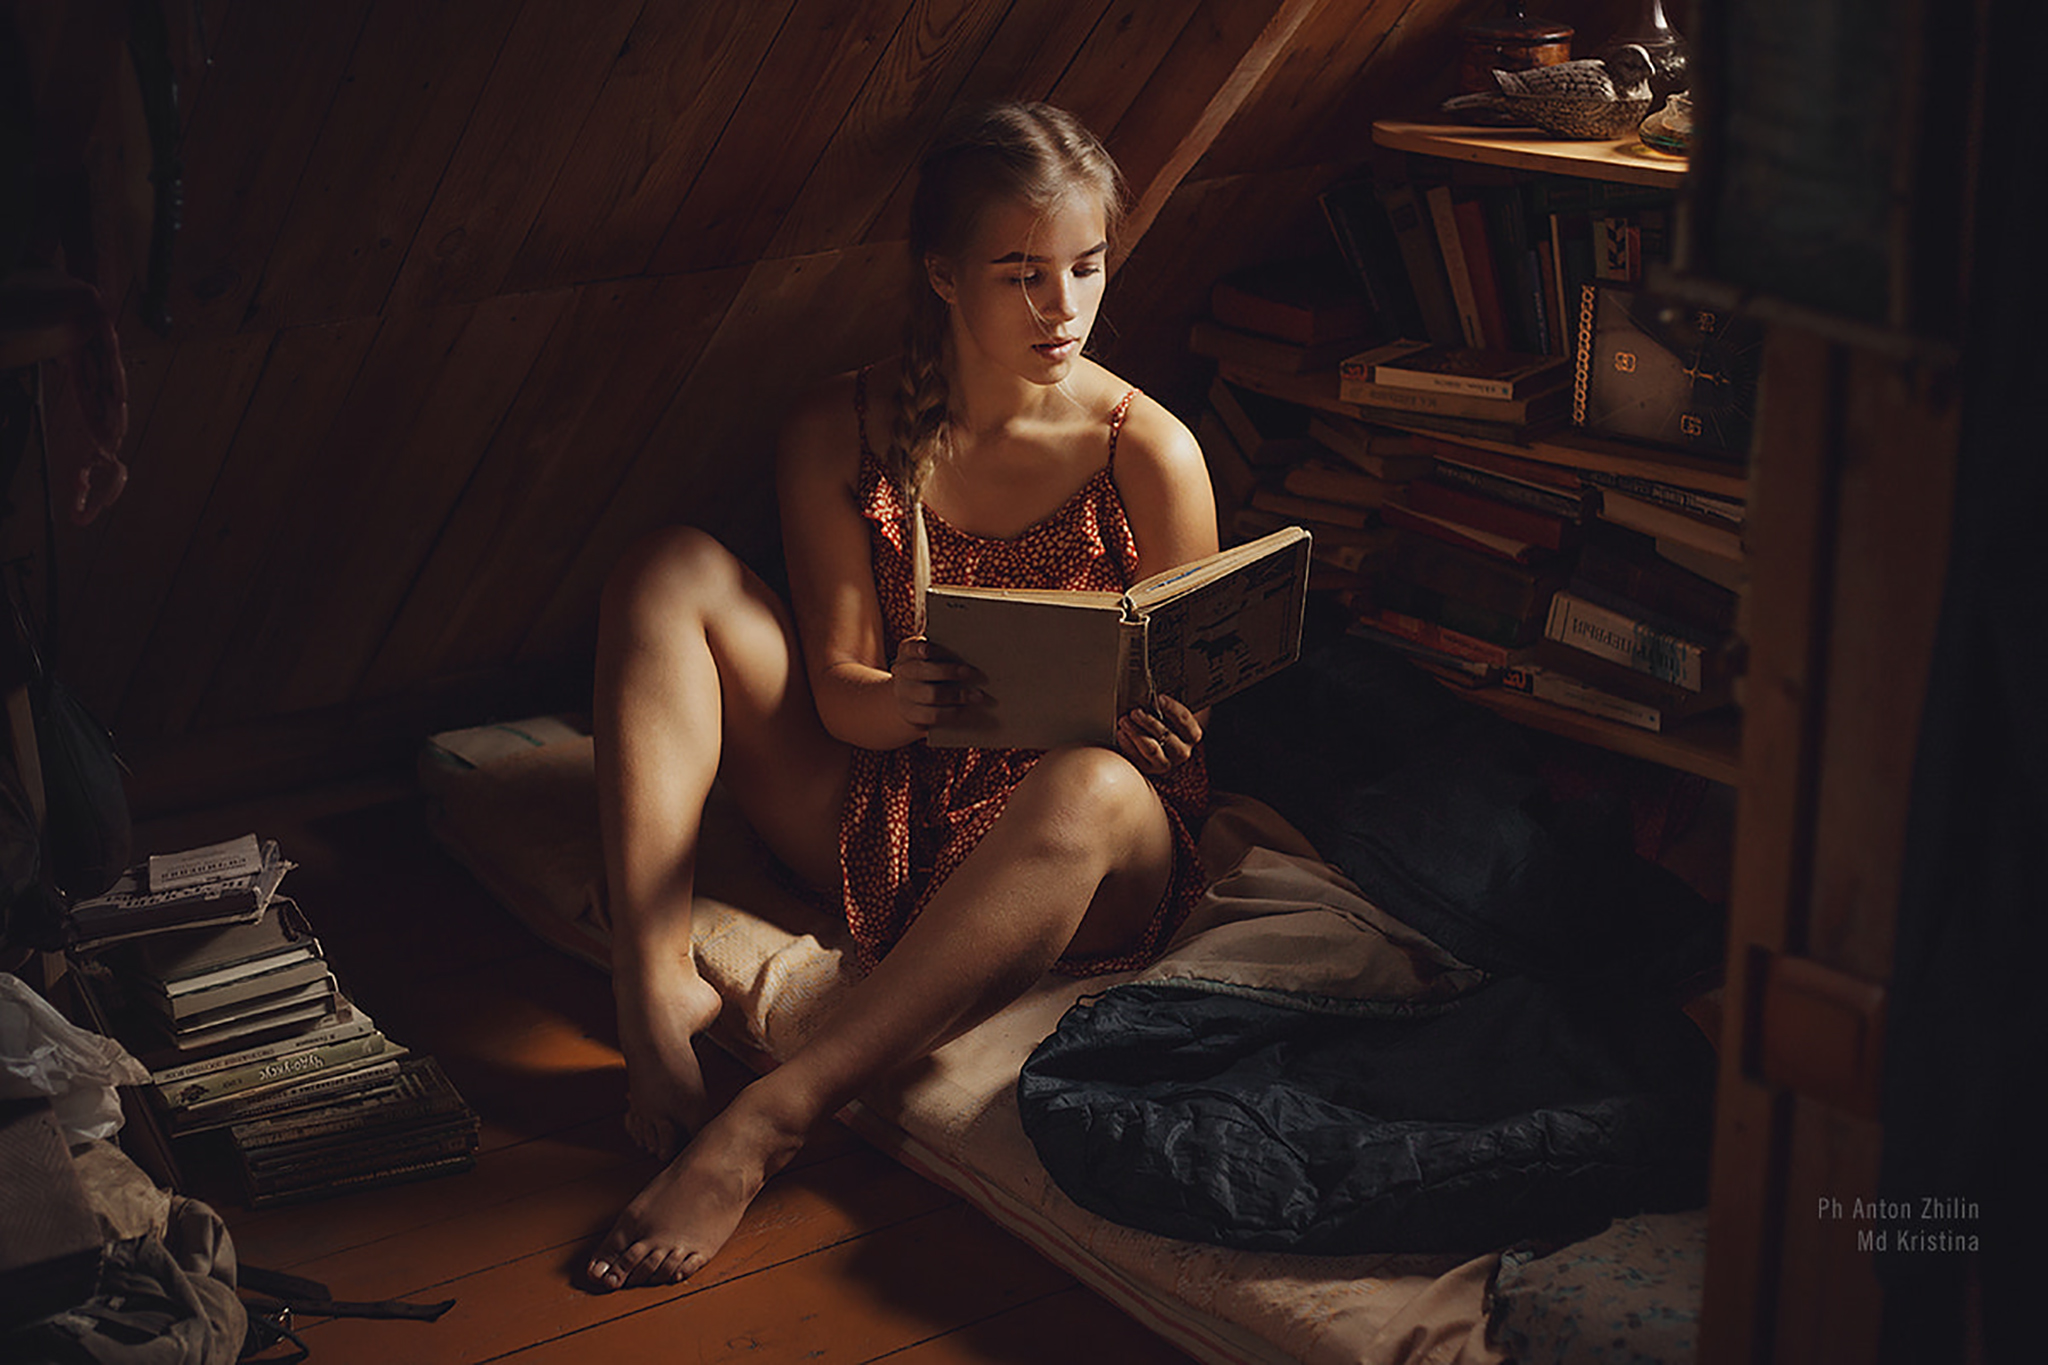 Kristina Anton Zhilin Books Reading Feet Barefoot Dress Bare Shoulders Tiptoe Young Woman Indoors Wo 2048x1365